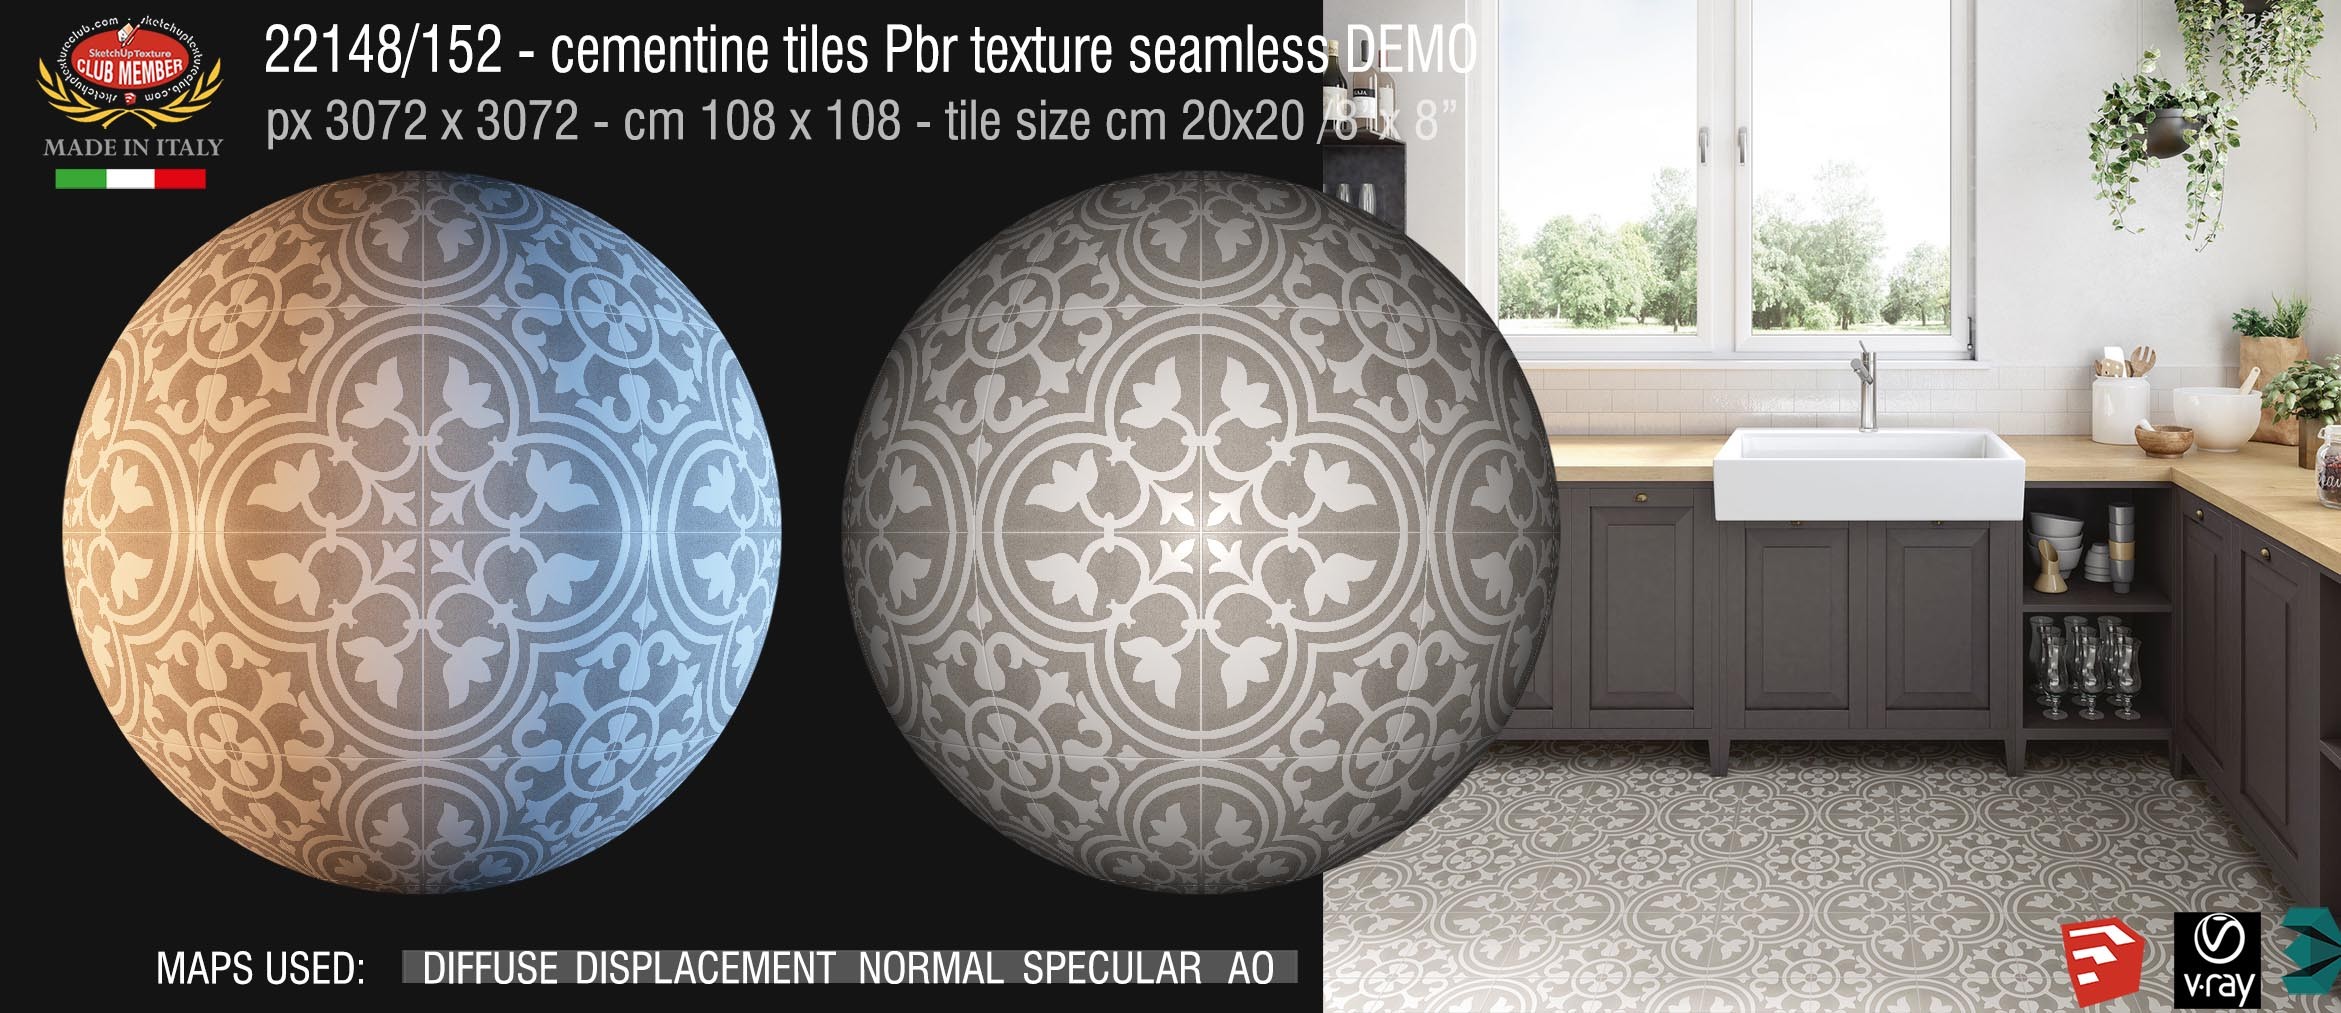 22148/152  Cementine tiles Pbr texture seamless DEMO - porcelain stoneware concrete look